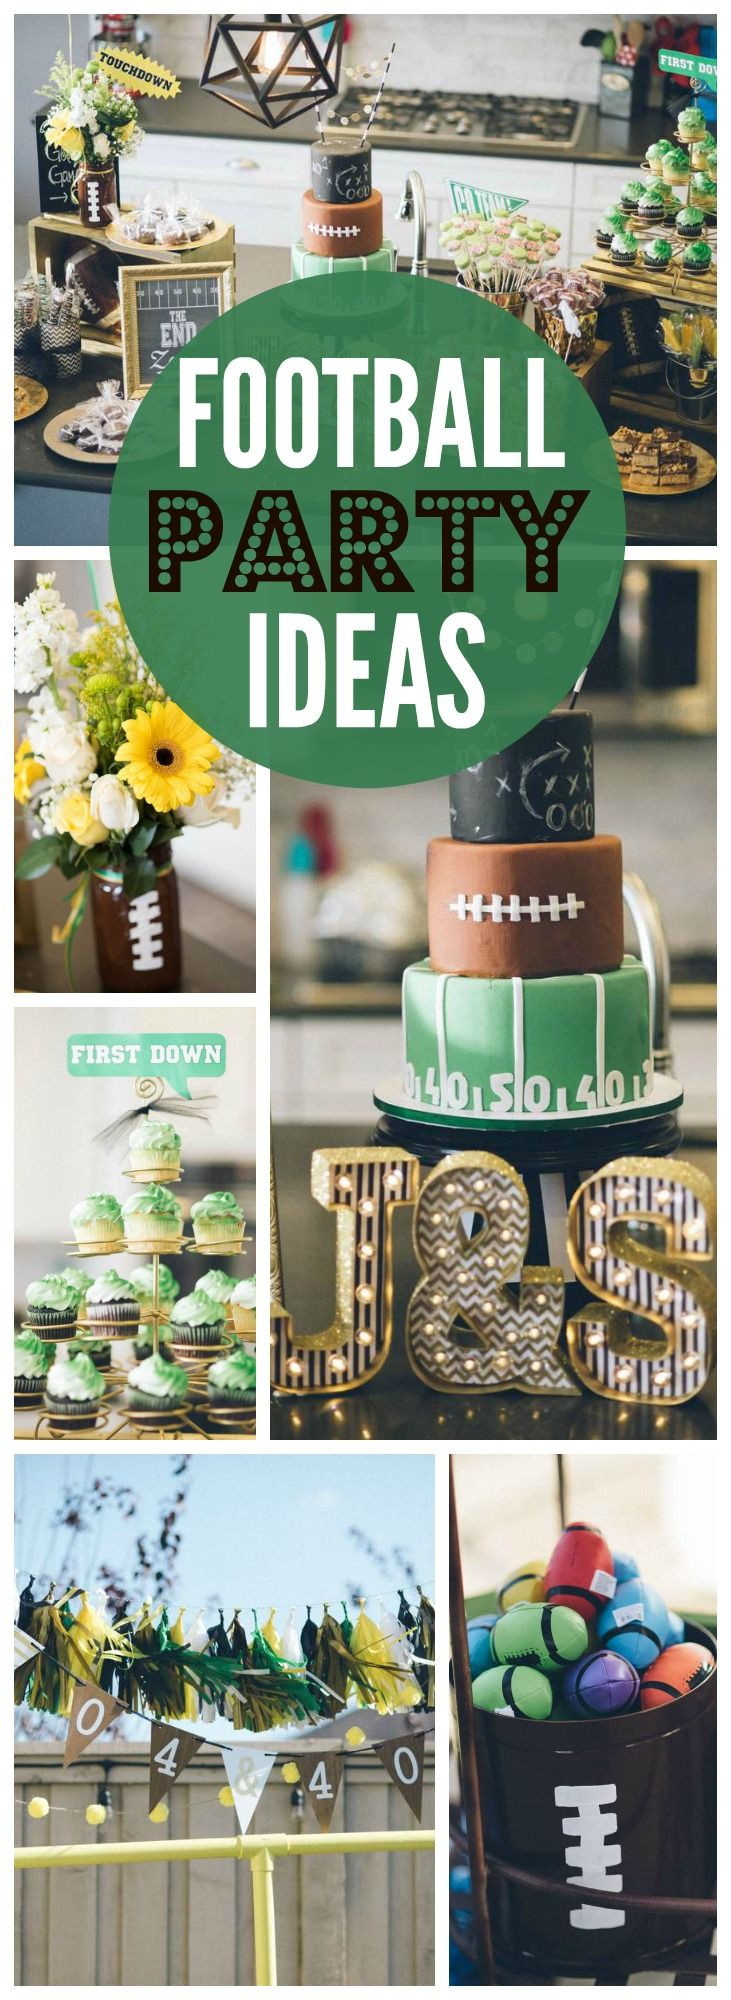 Football Birthday Party Ideas
 318 best Football Party Ideas images on Pinterest